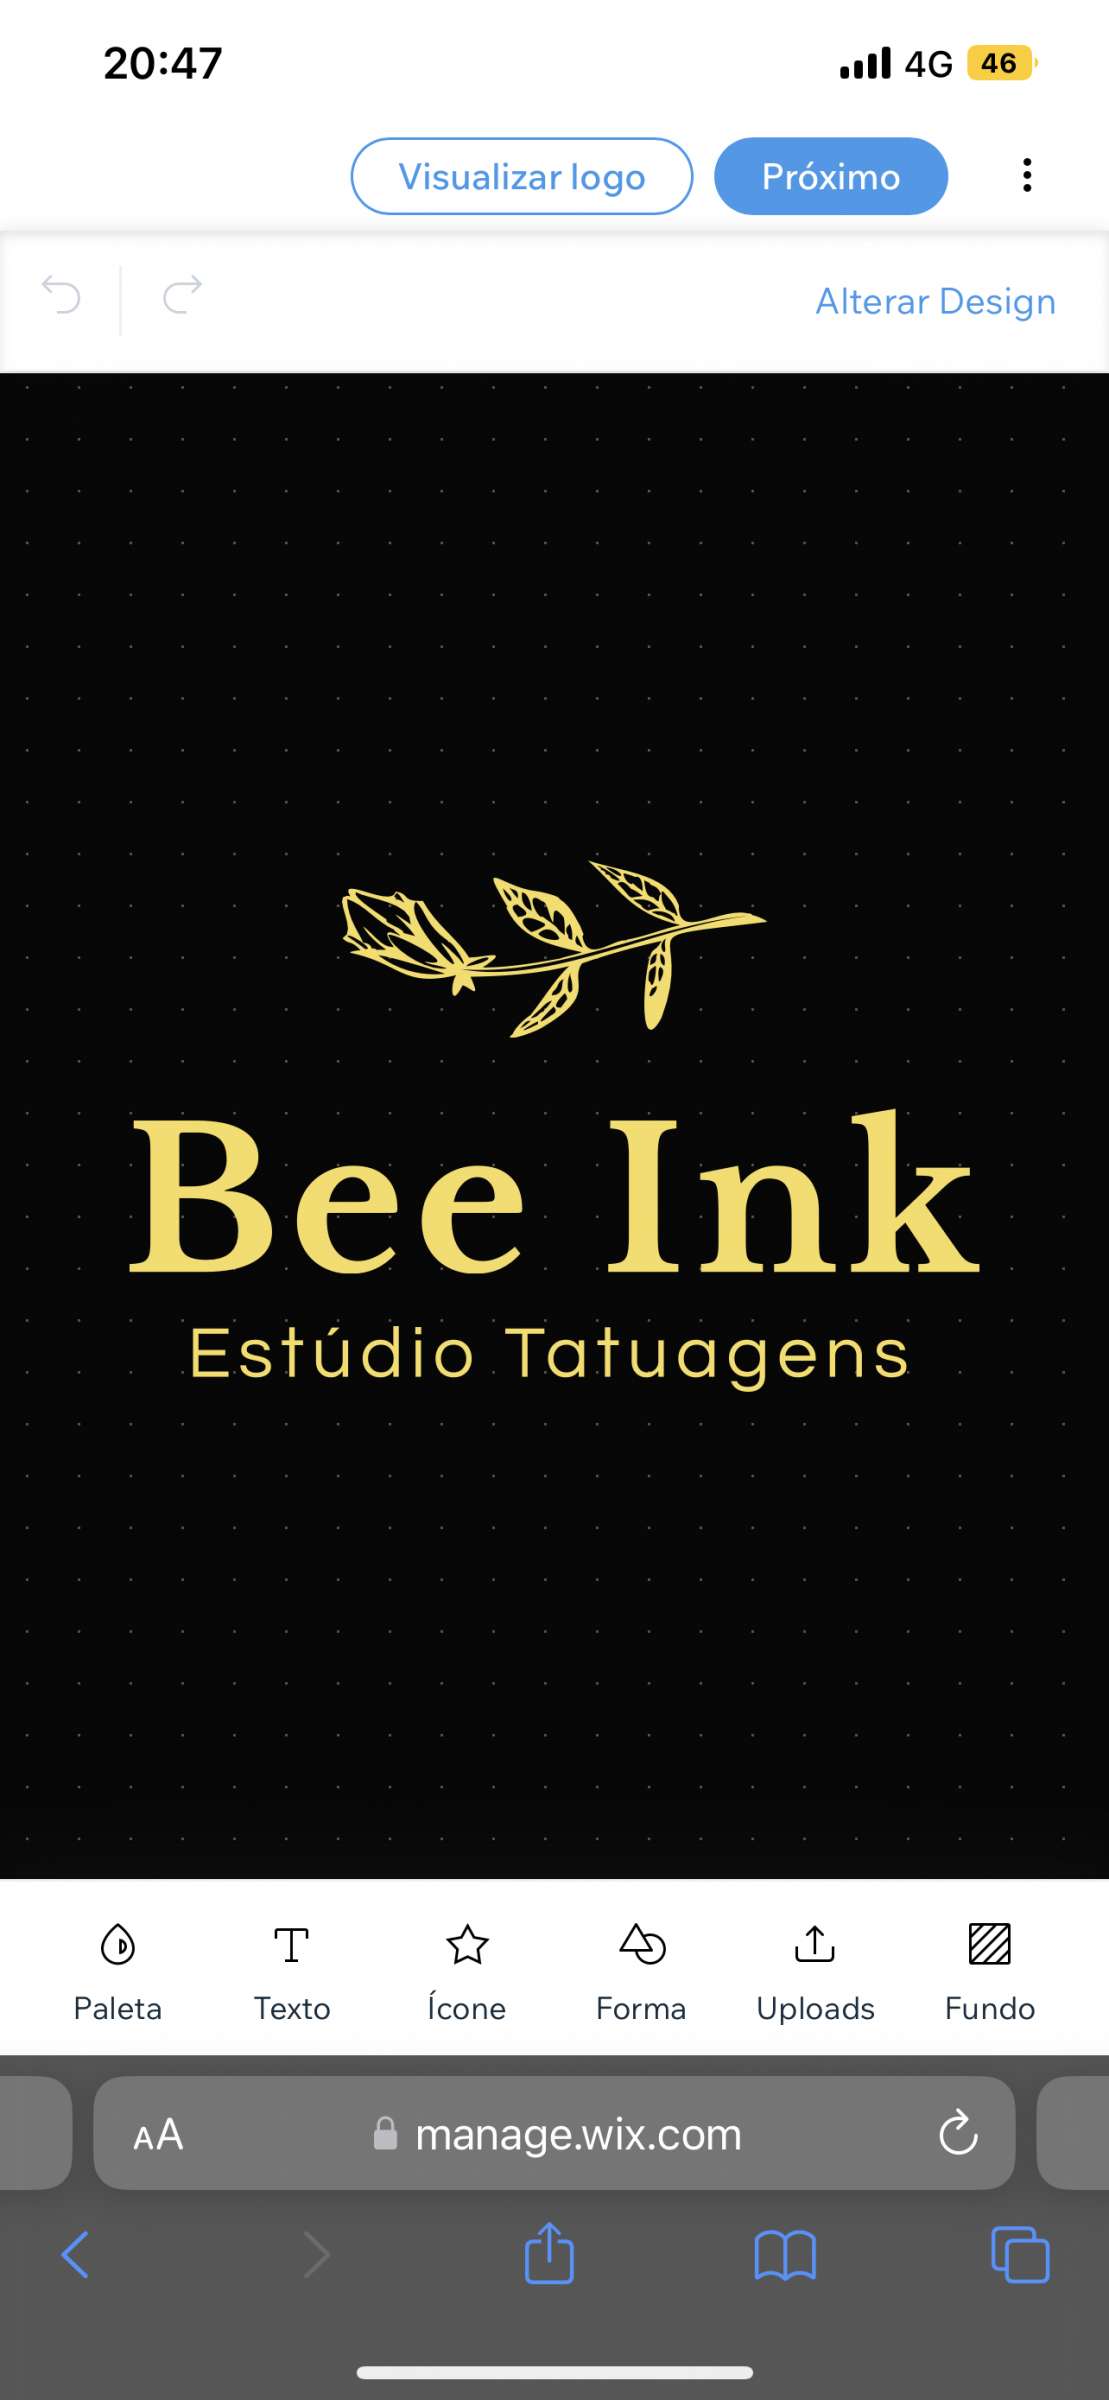 Bee Ink - Barreiro - Tatuagens e Piercings